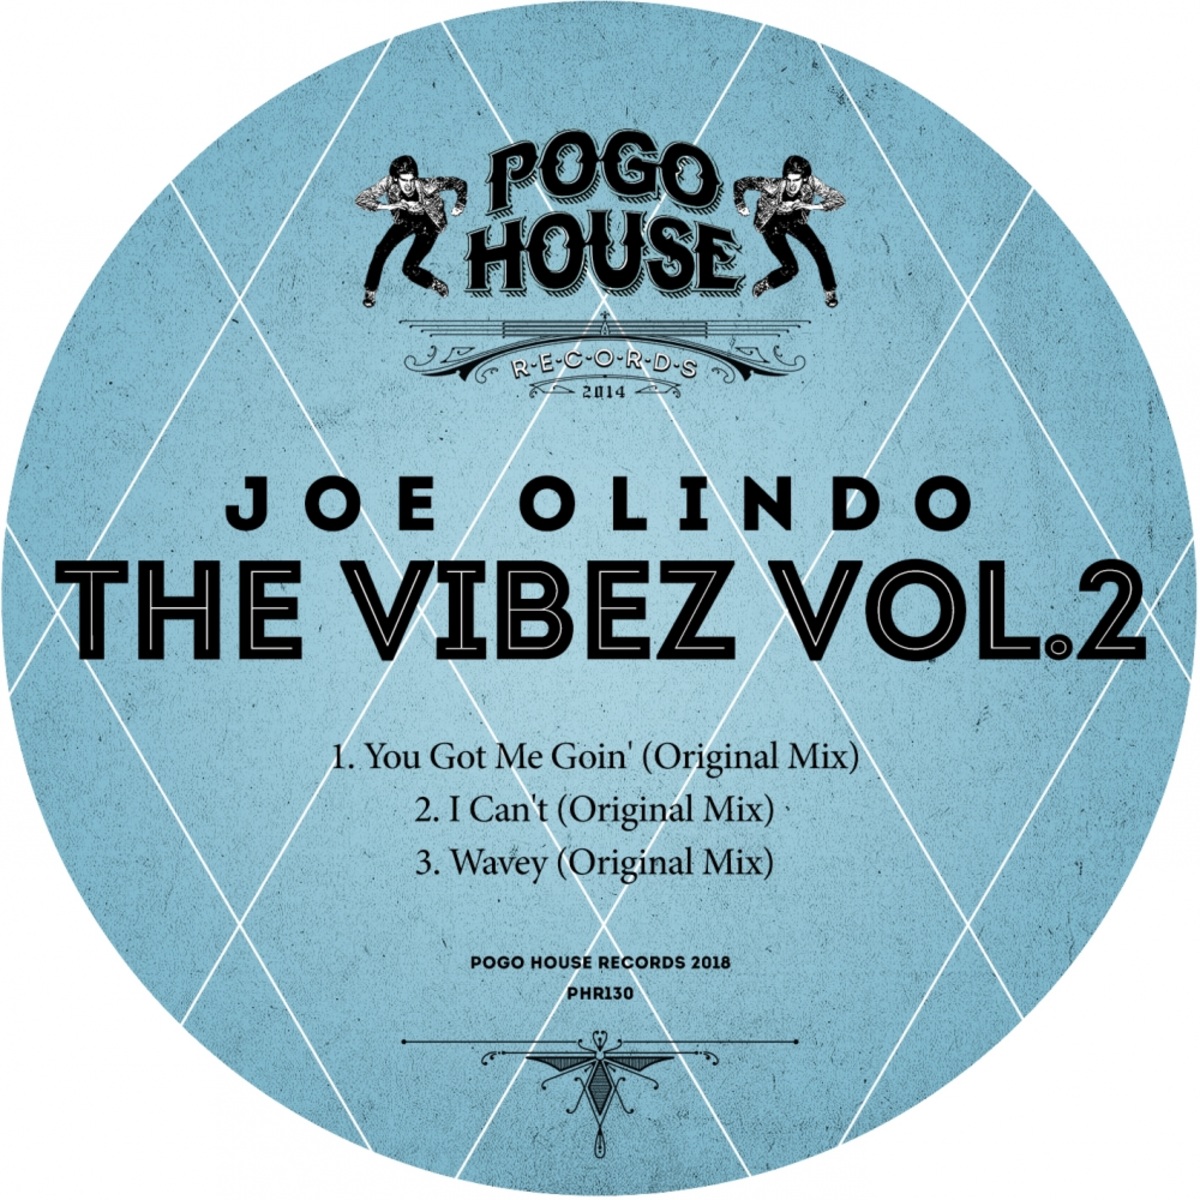 Joe Olindo - The Vibez, Vol. 2 / Pogo House Records